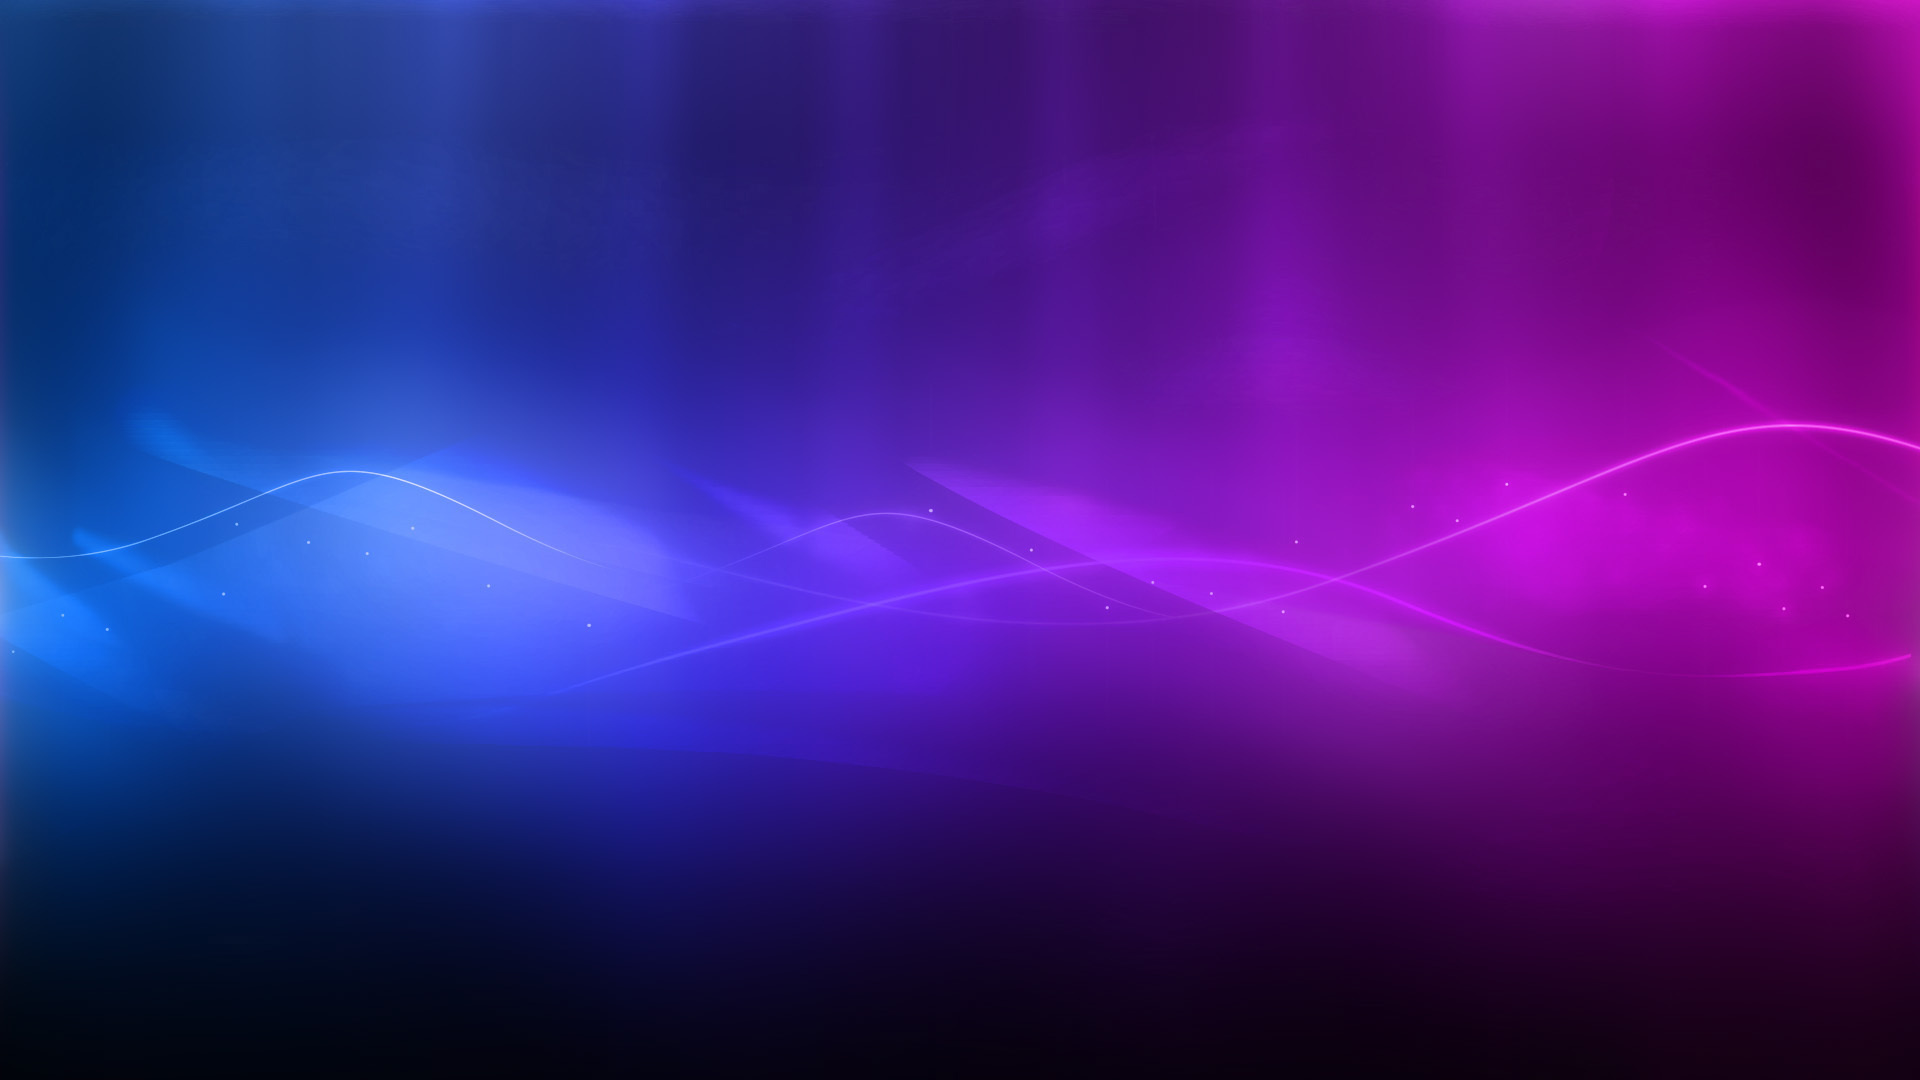 абстракции, линии, полосы, фиолетово-синий фон, abstraction, lines, stripes, purple and blue background